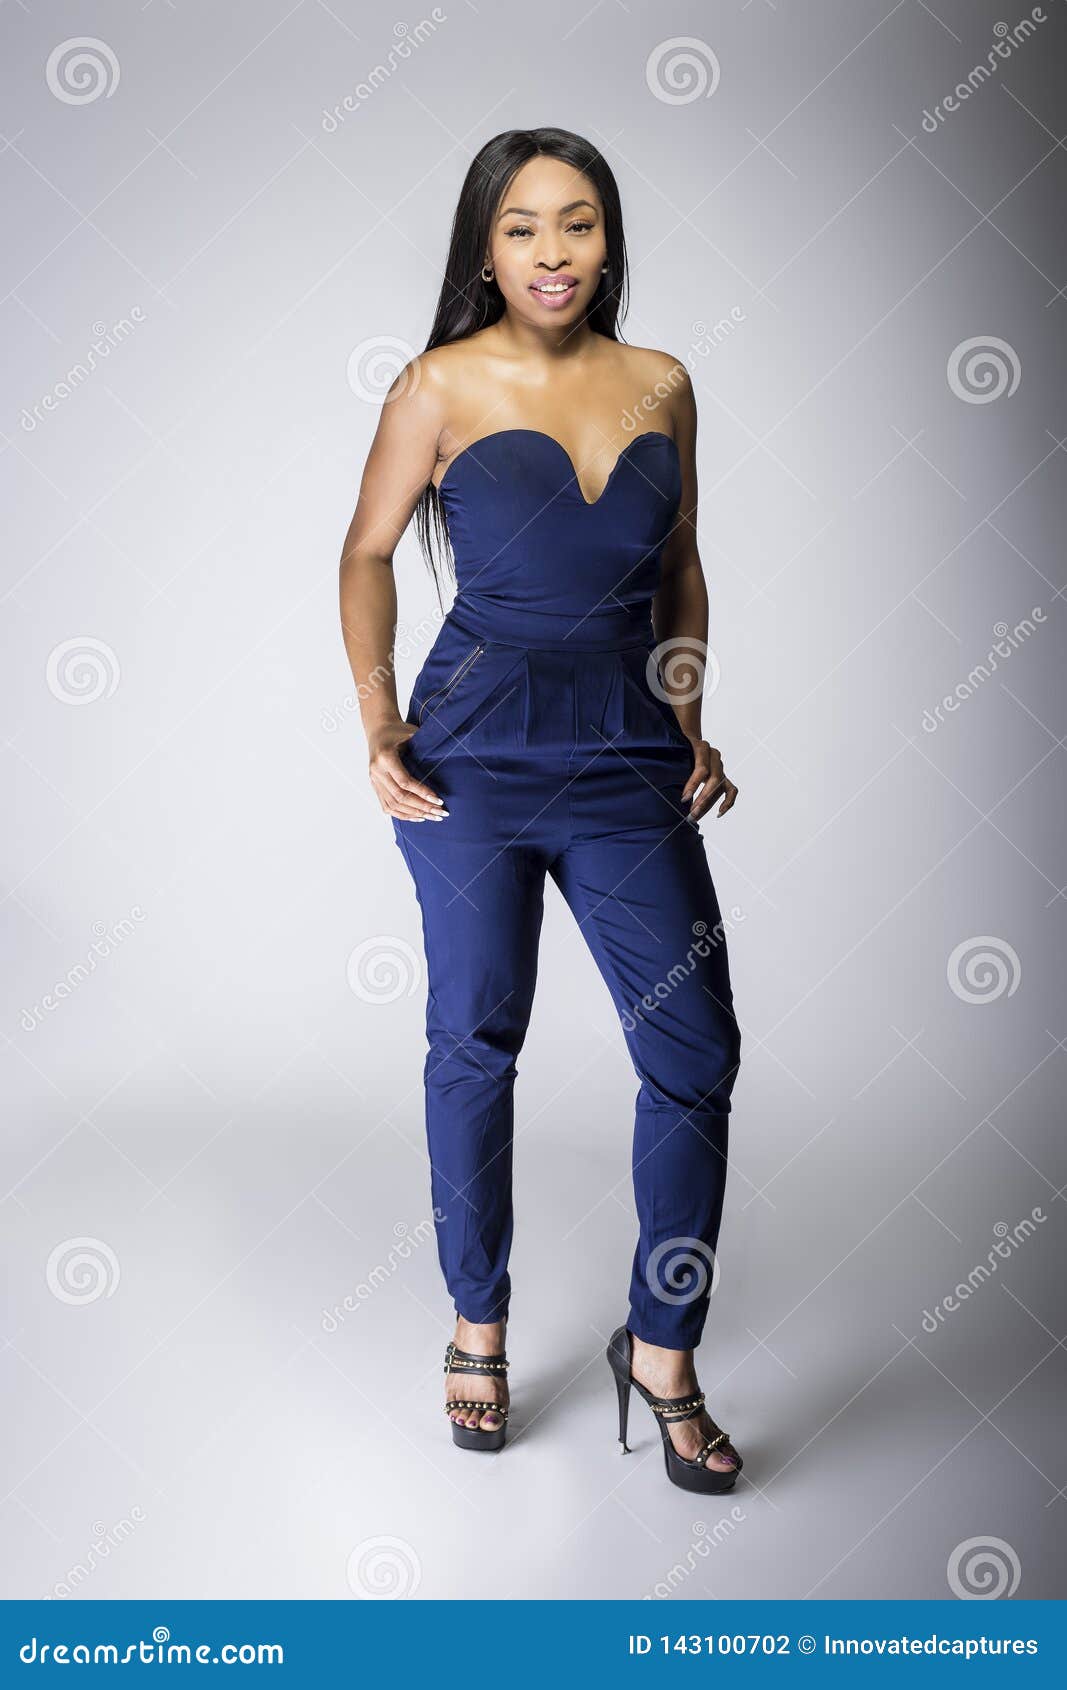 Black Female Fashion Model Wearing Blue Outfit Stock Photo - Image of ...